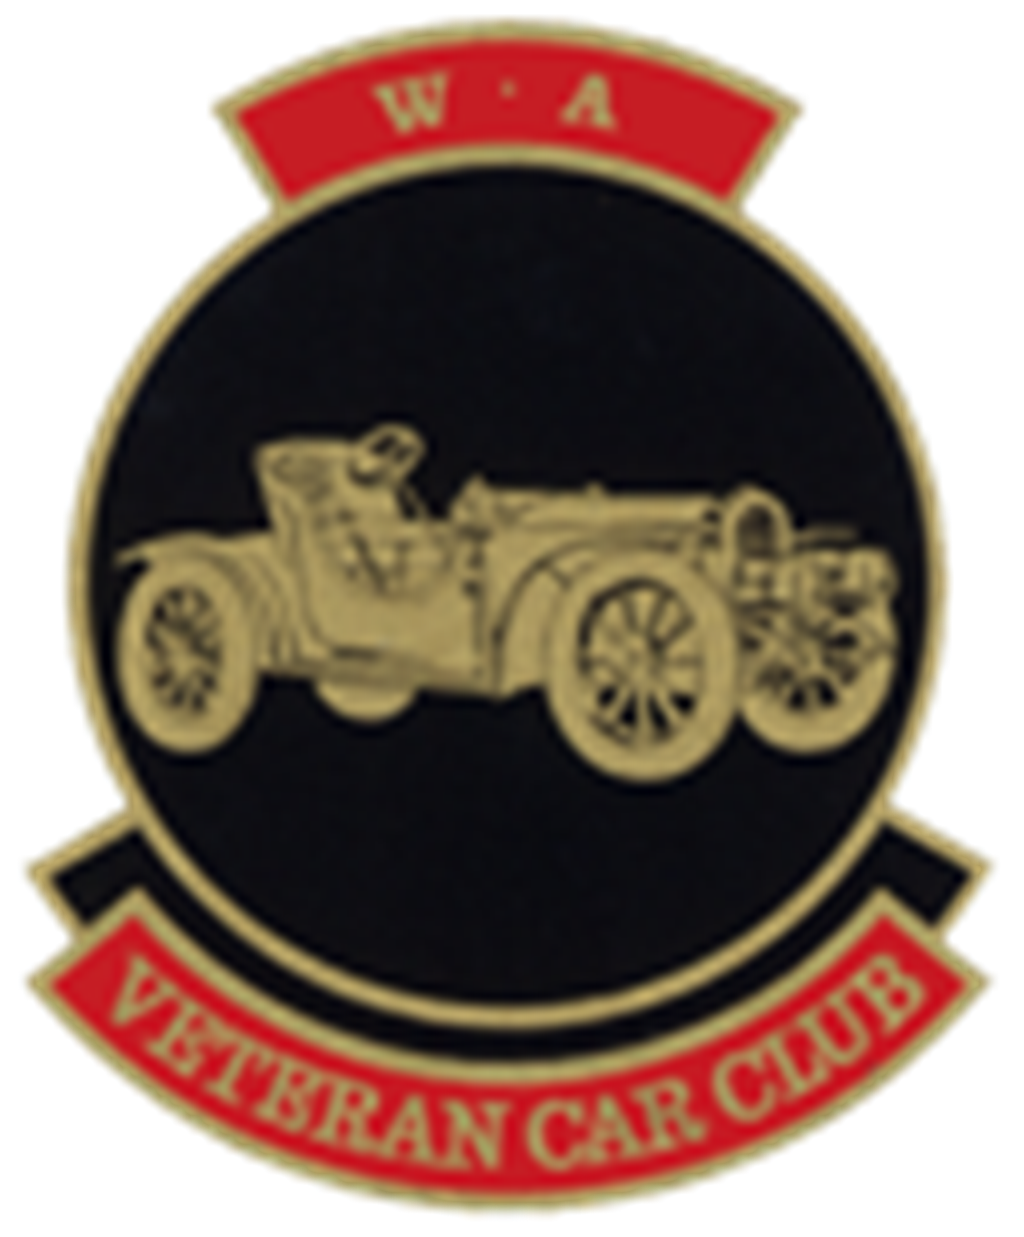 The National Veteran Car Club